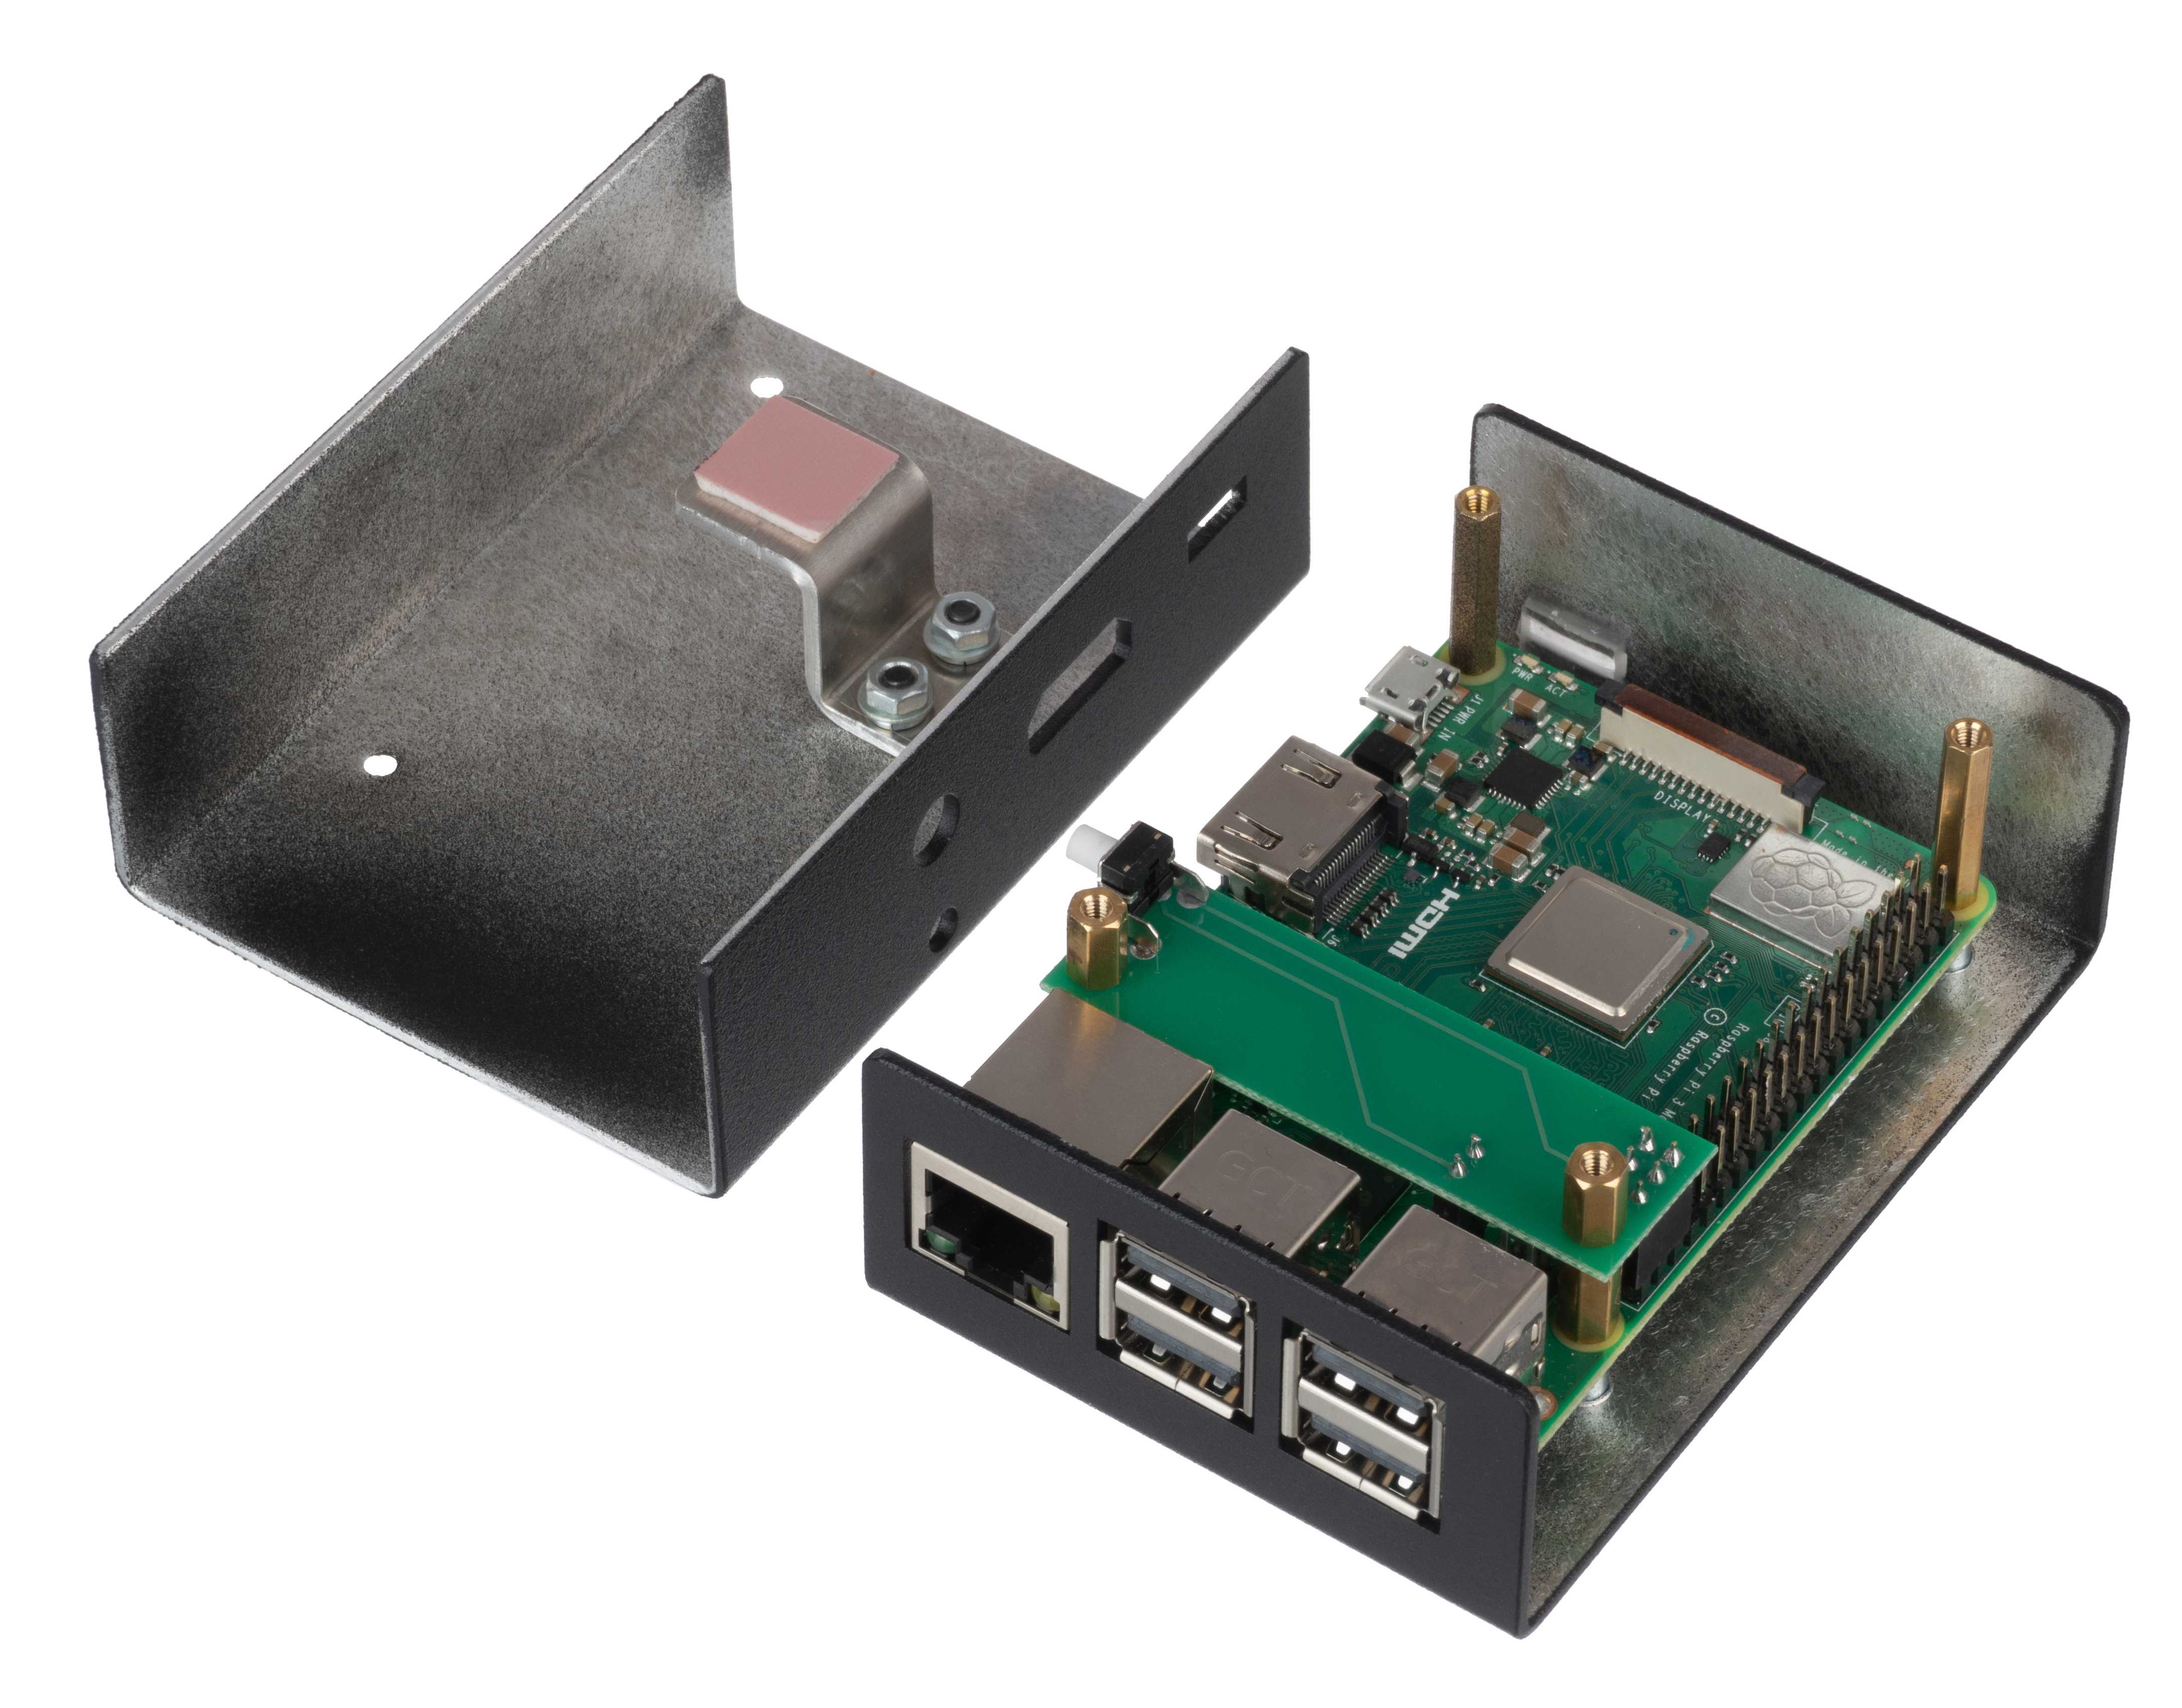 Raspberry pi 3 model b+: мини-пк с wi-fi 802.11ac и bt 4.2 - micropi